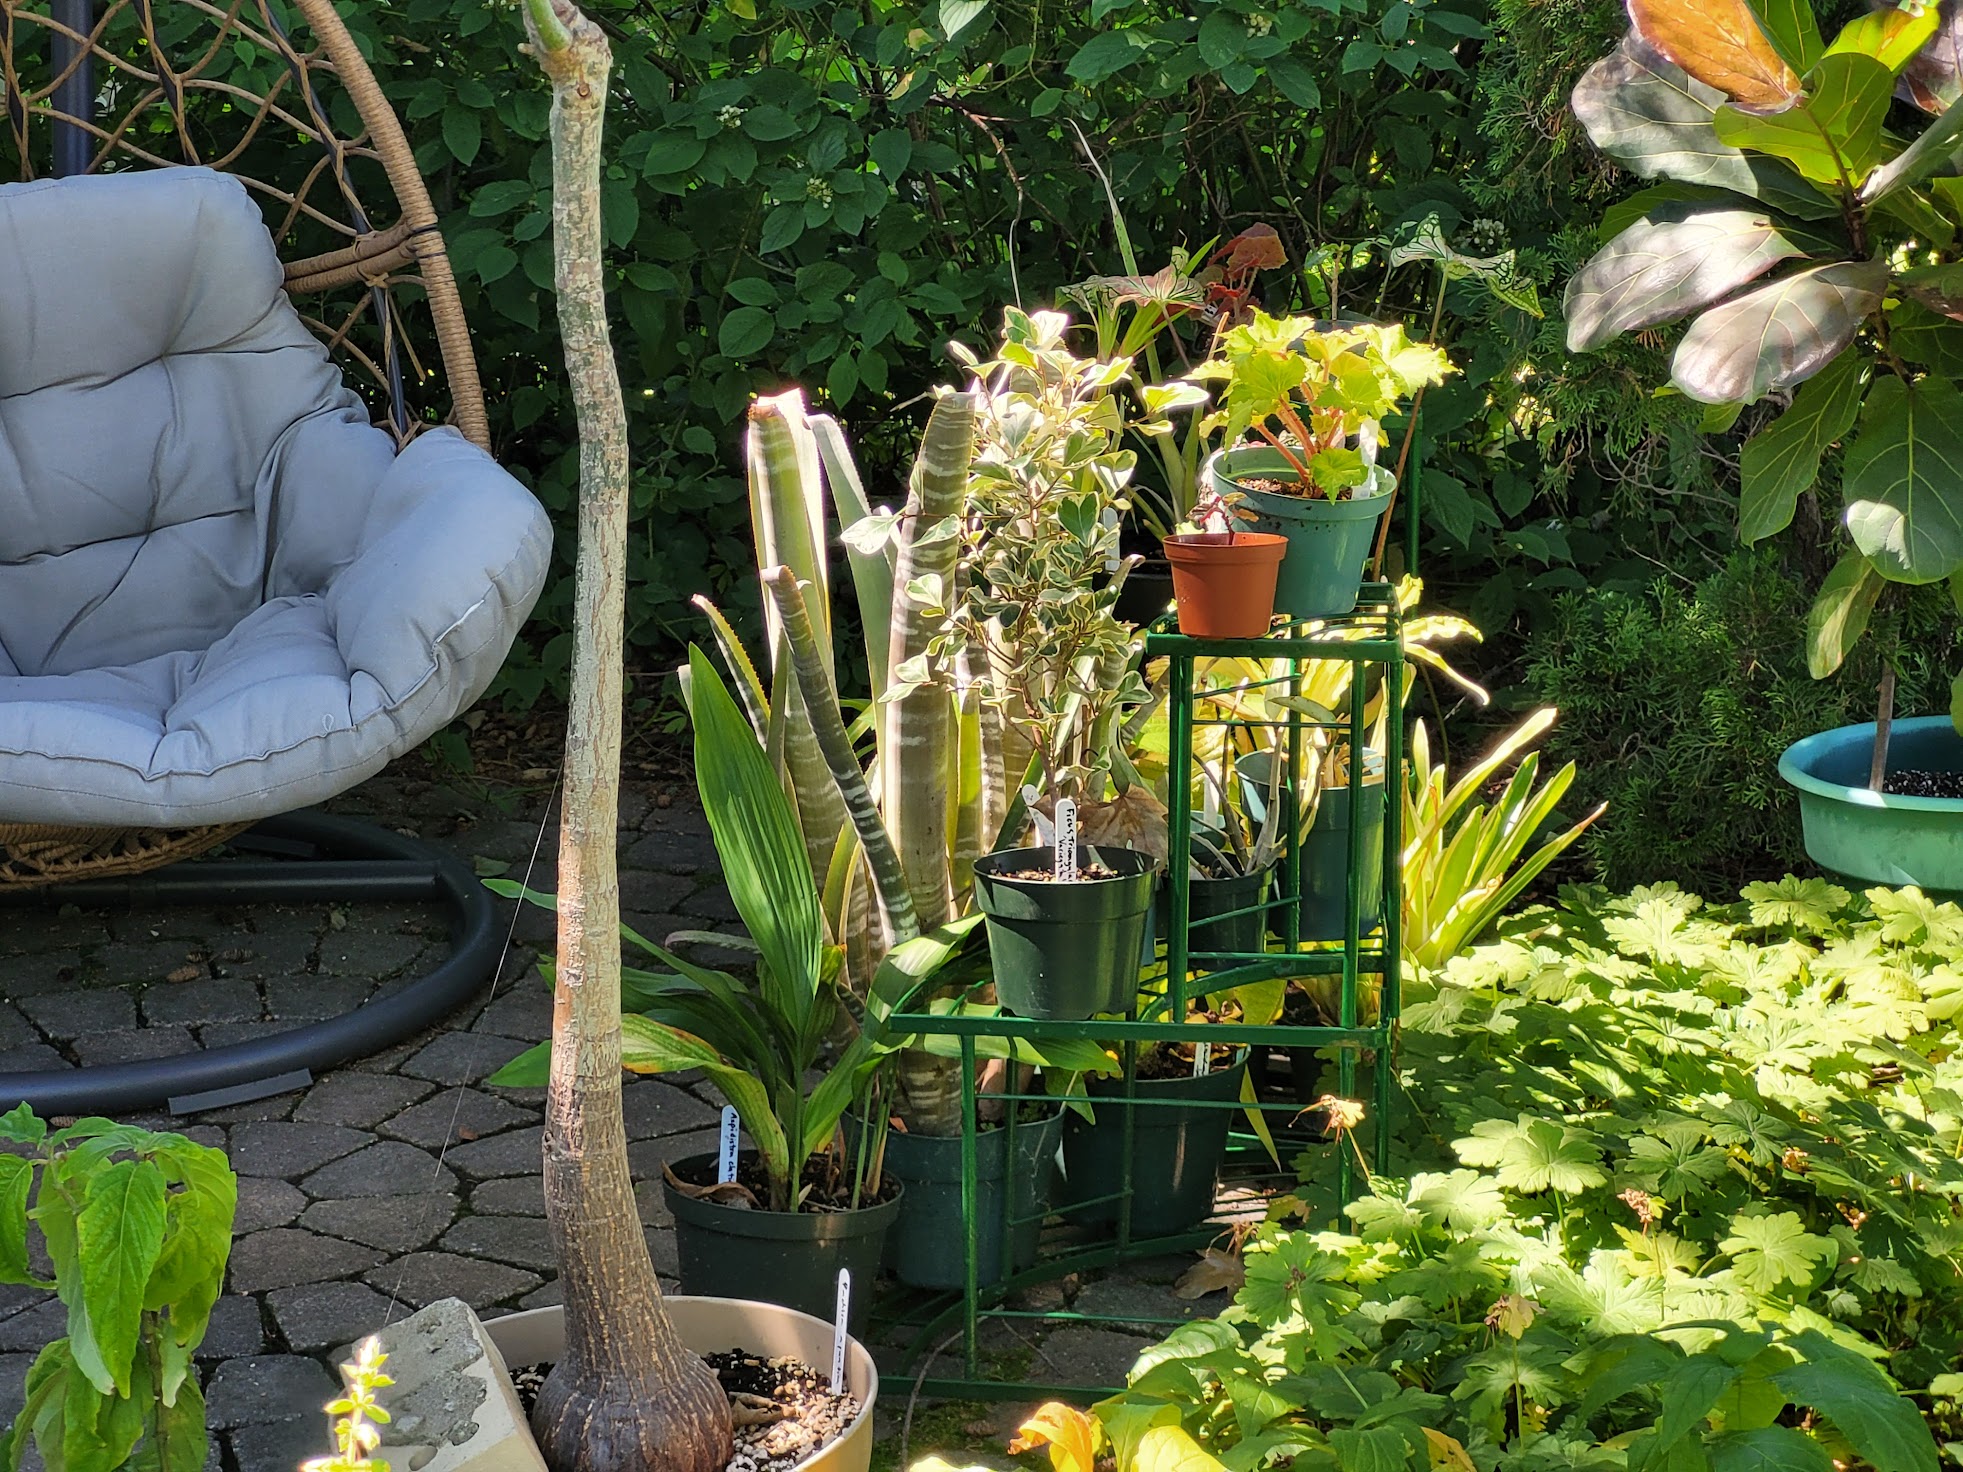 Houseplants spending the summer in a garden outdoors